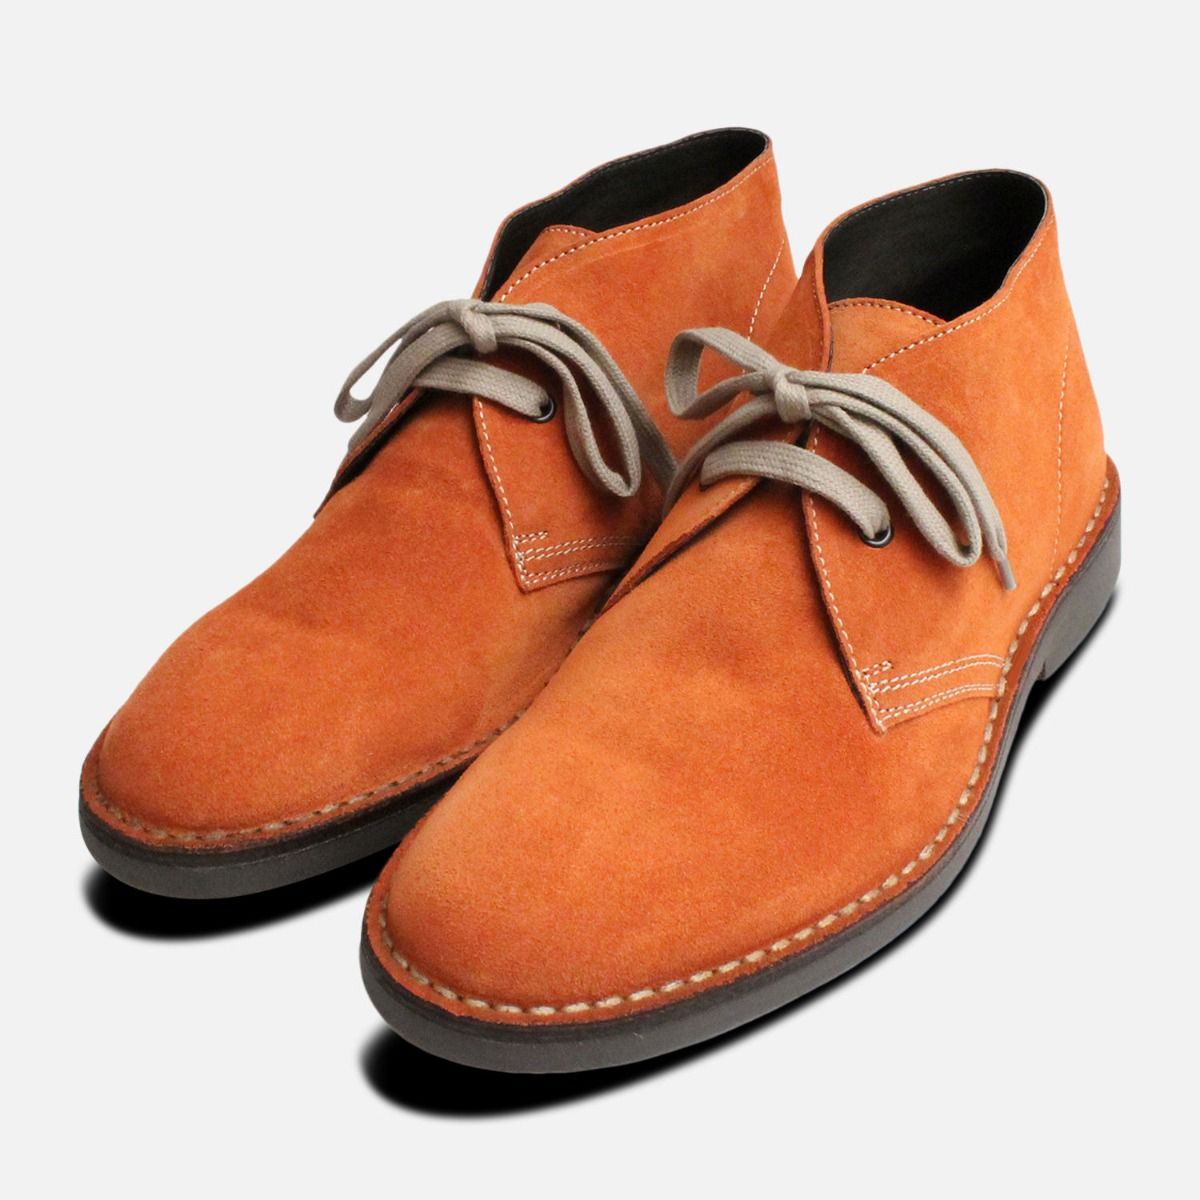 burnt orange suede boots